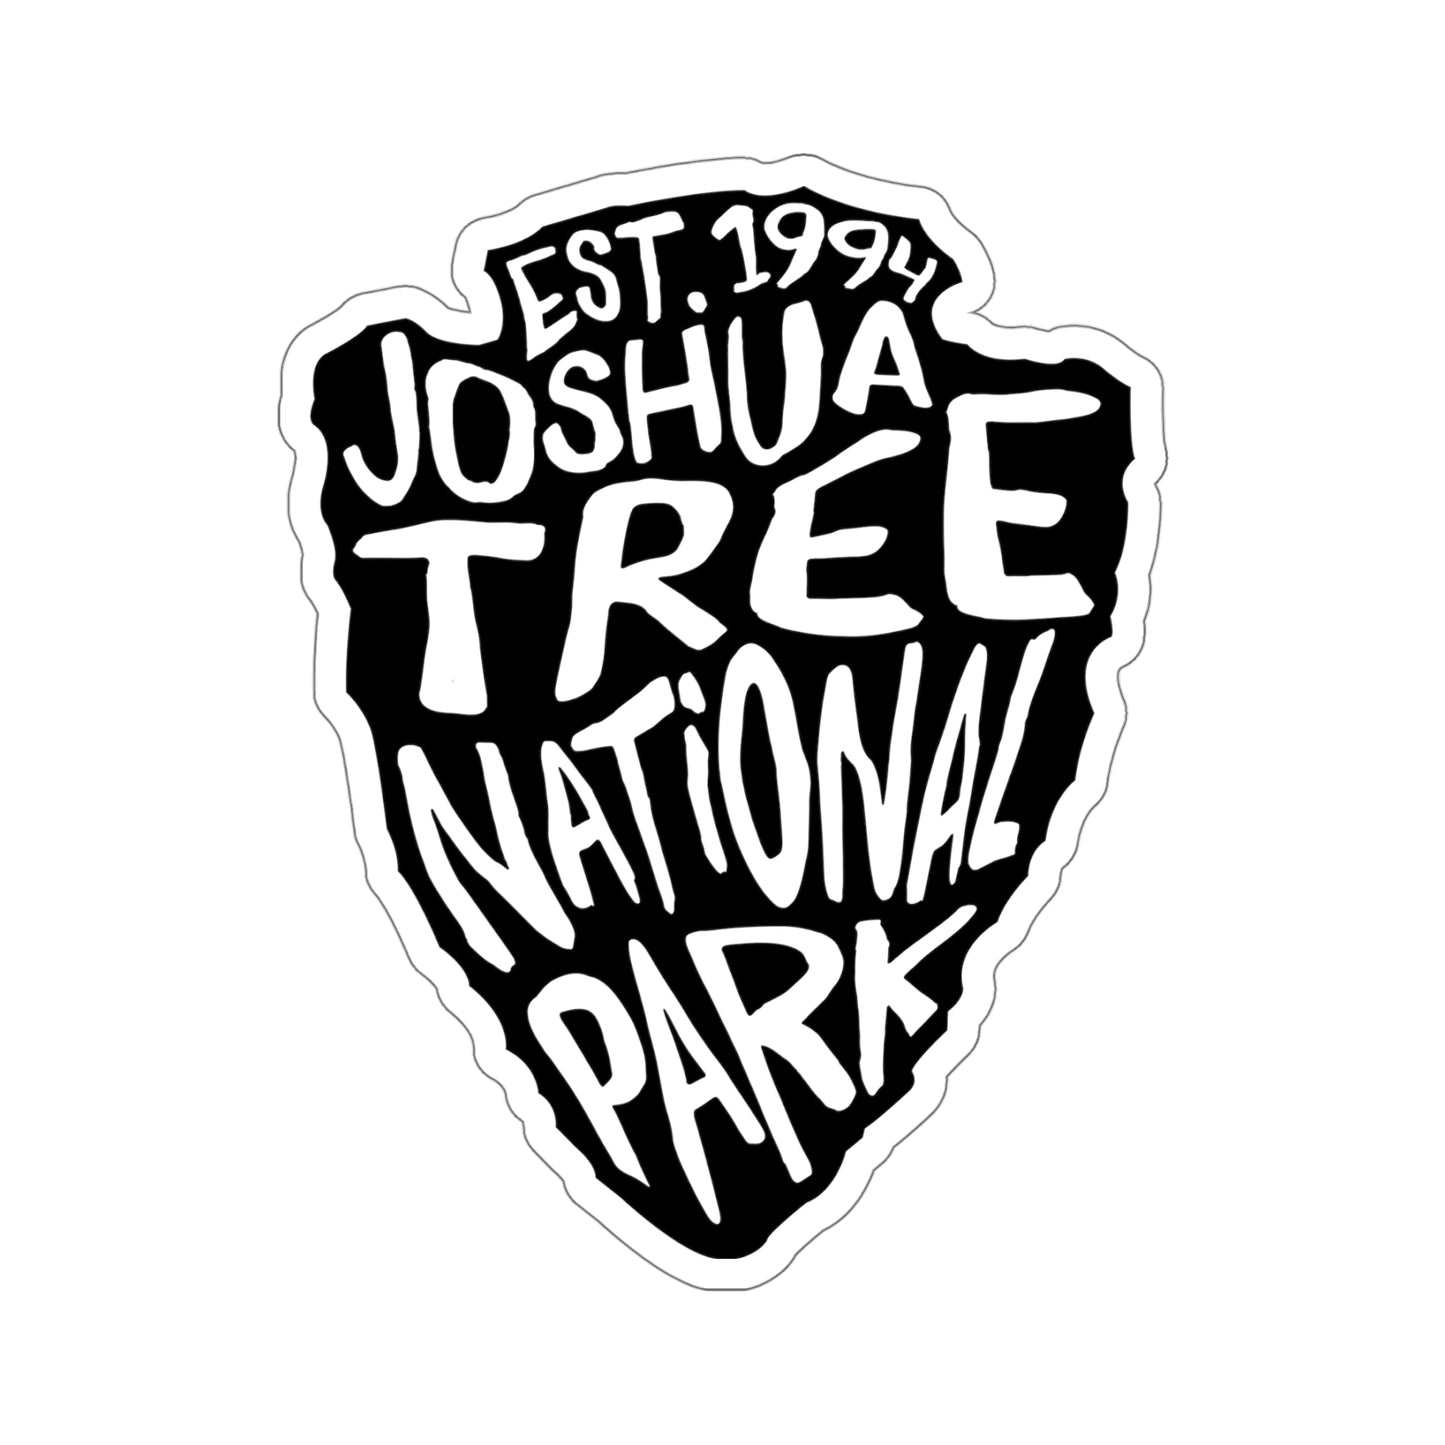 Joshua Tree National Park Sticker - Arrow Head Design